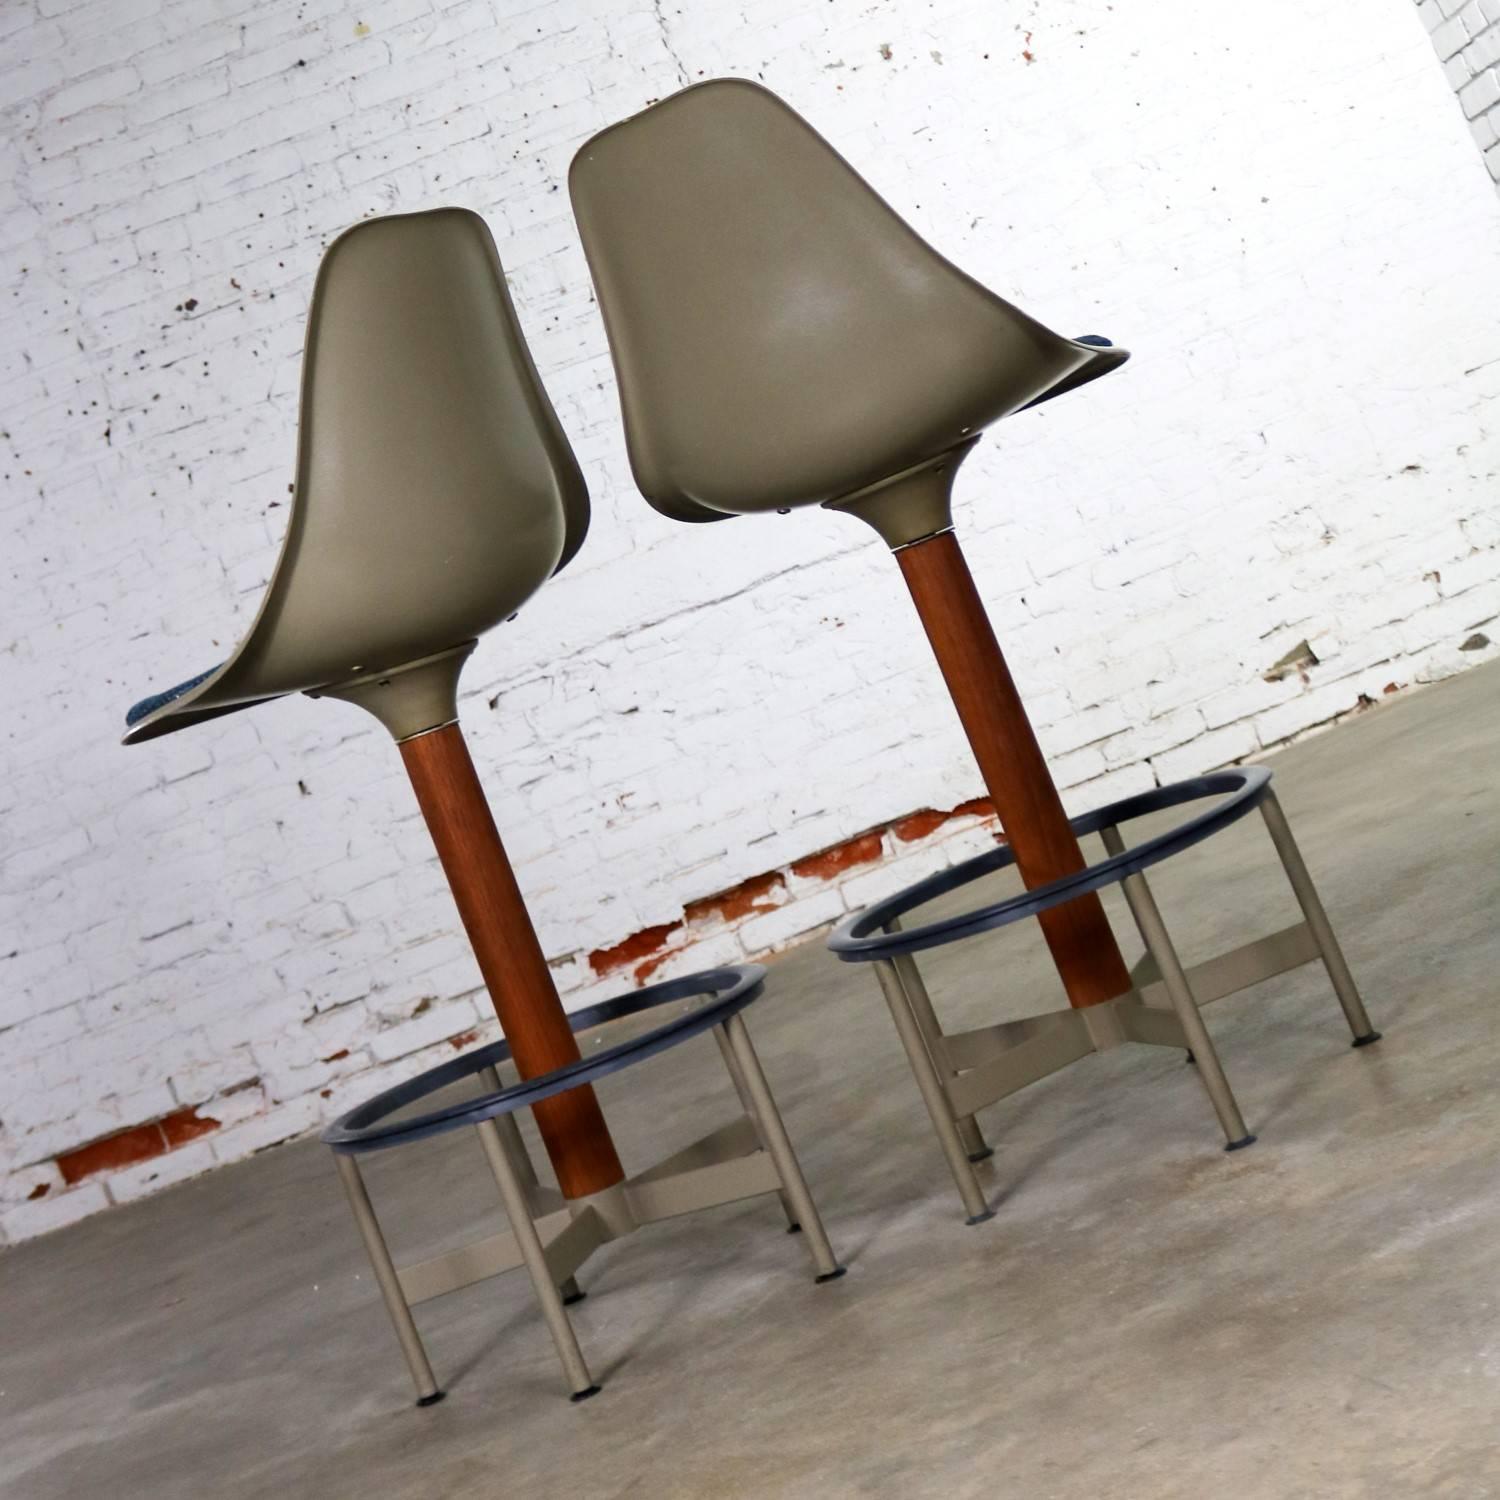 Molded Pair of Burke Swivel Bar Stools Mid-Century Modern Fiberglass Shell Fabric Seat